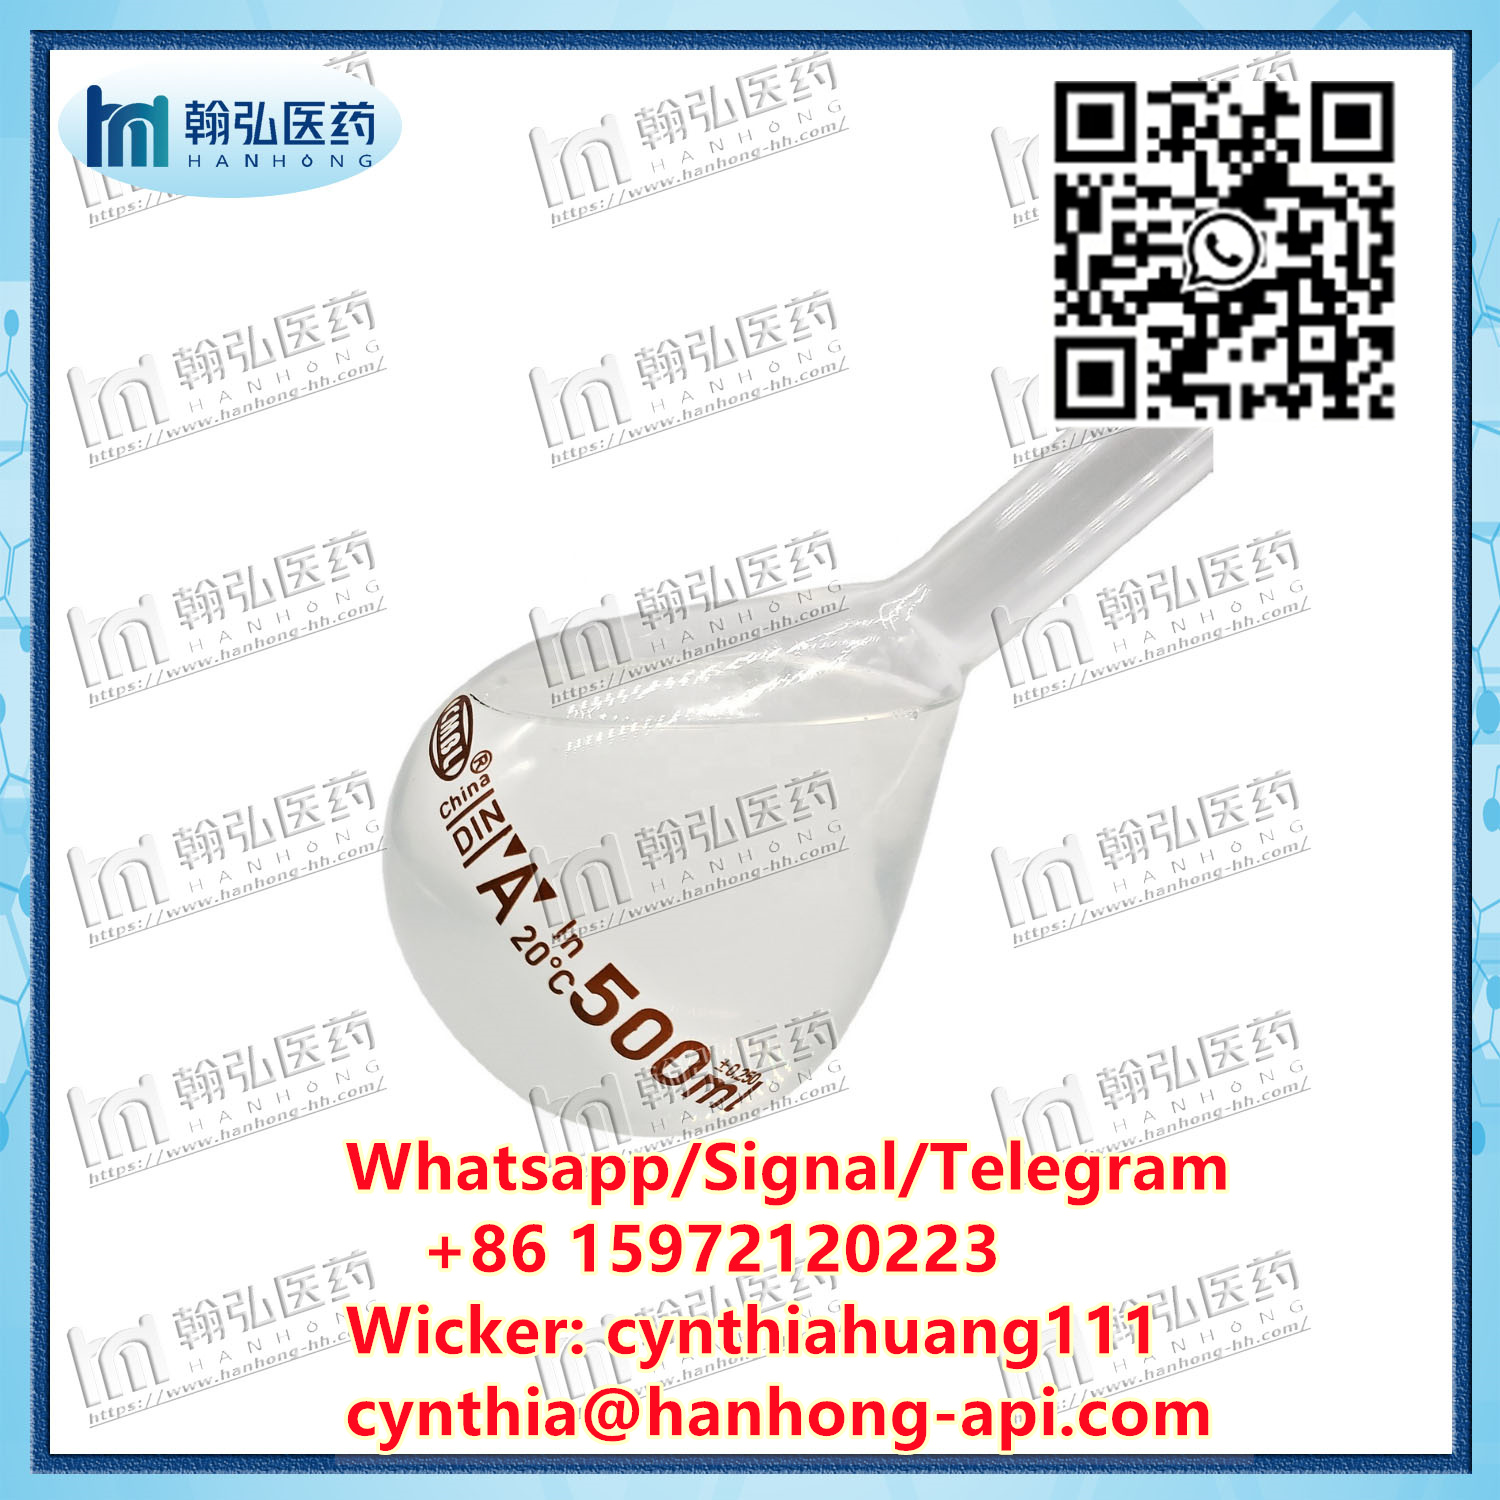 (2-Bromoethyl)benzene CAS103-63-9 Whatsapp: + 86 15972120223 Wicker: Cynthiahuang111